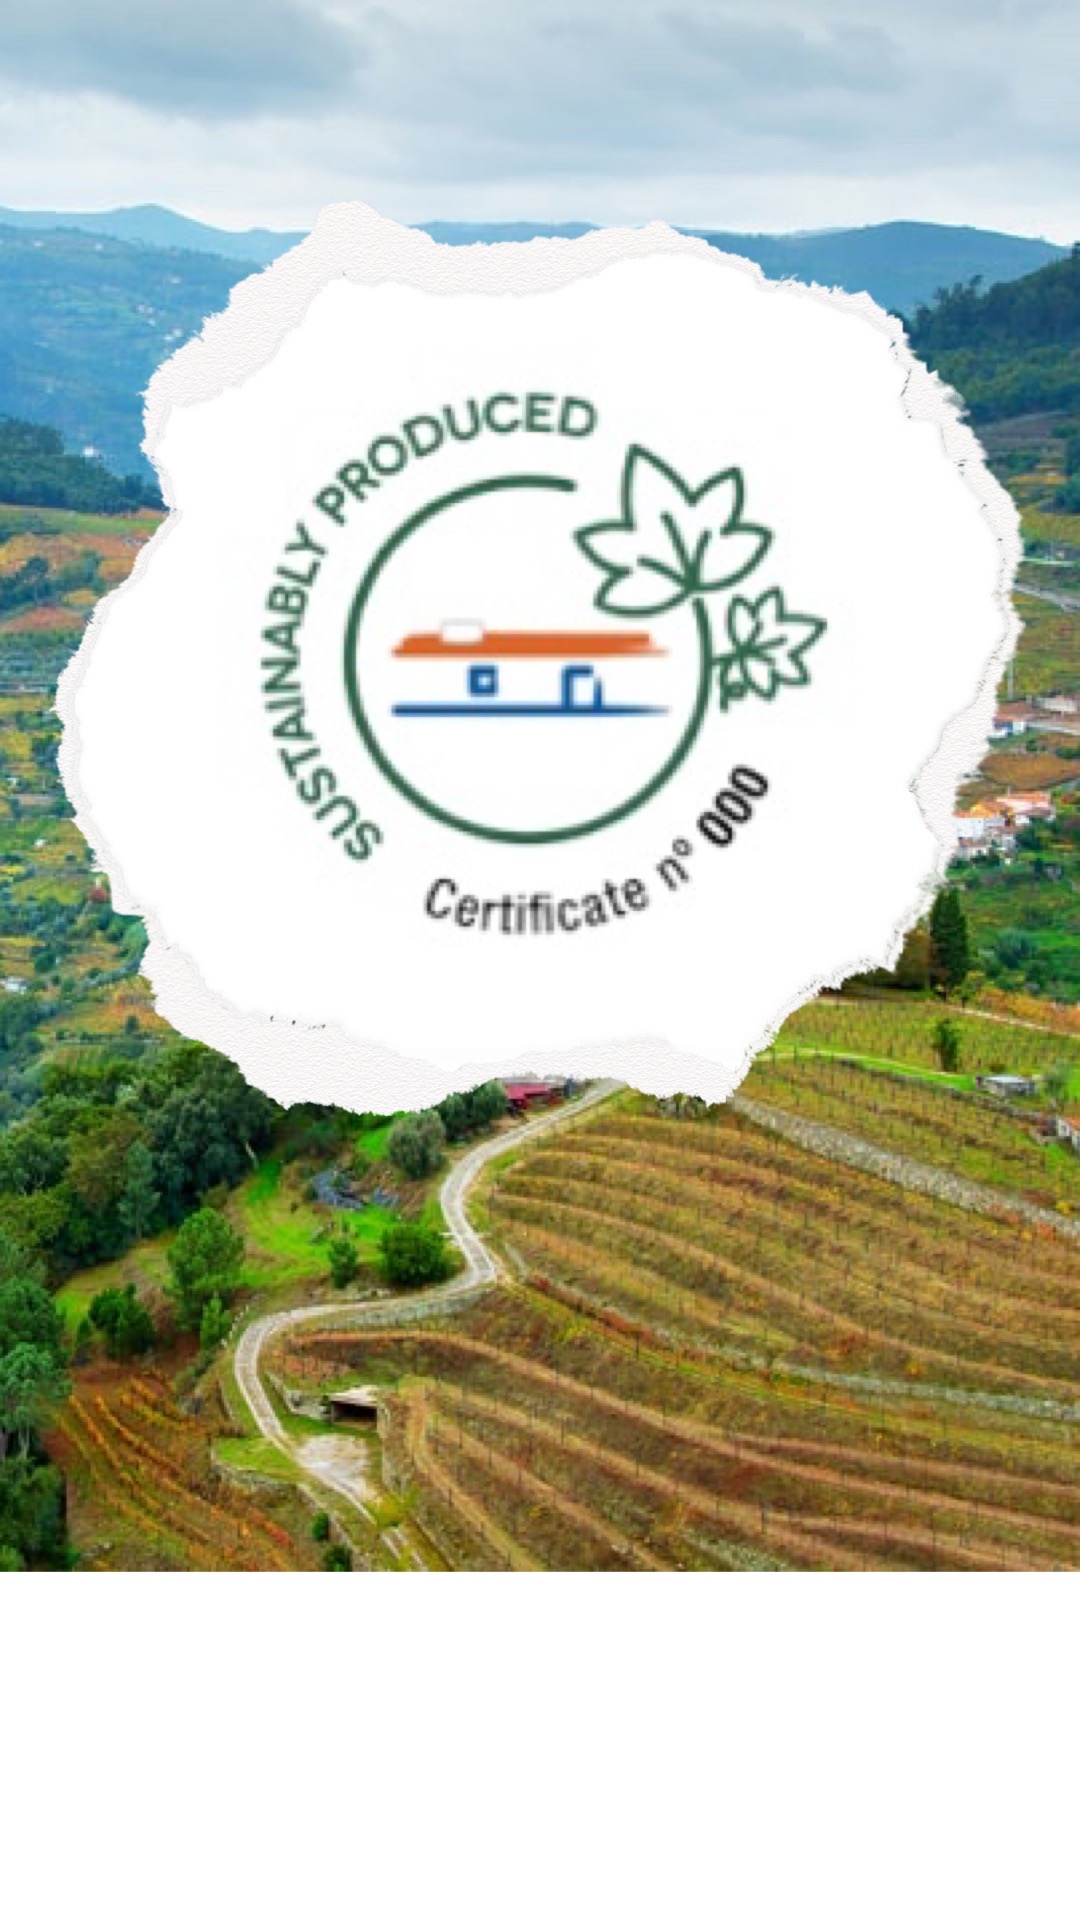 Wines of Alentejo Announce New Sustainability Certification Program